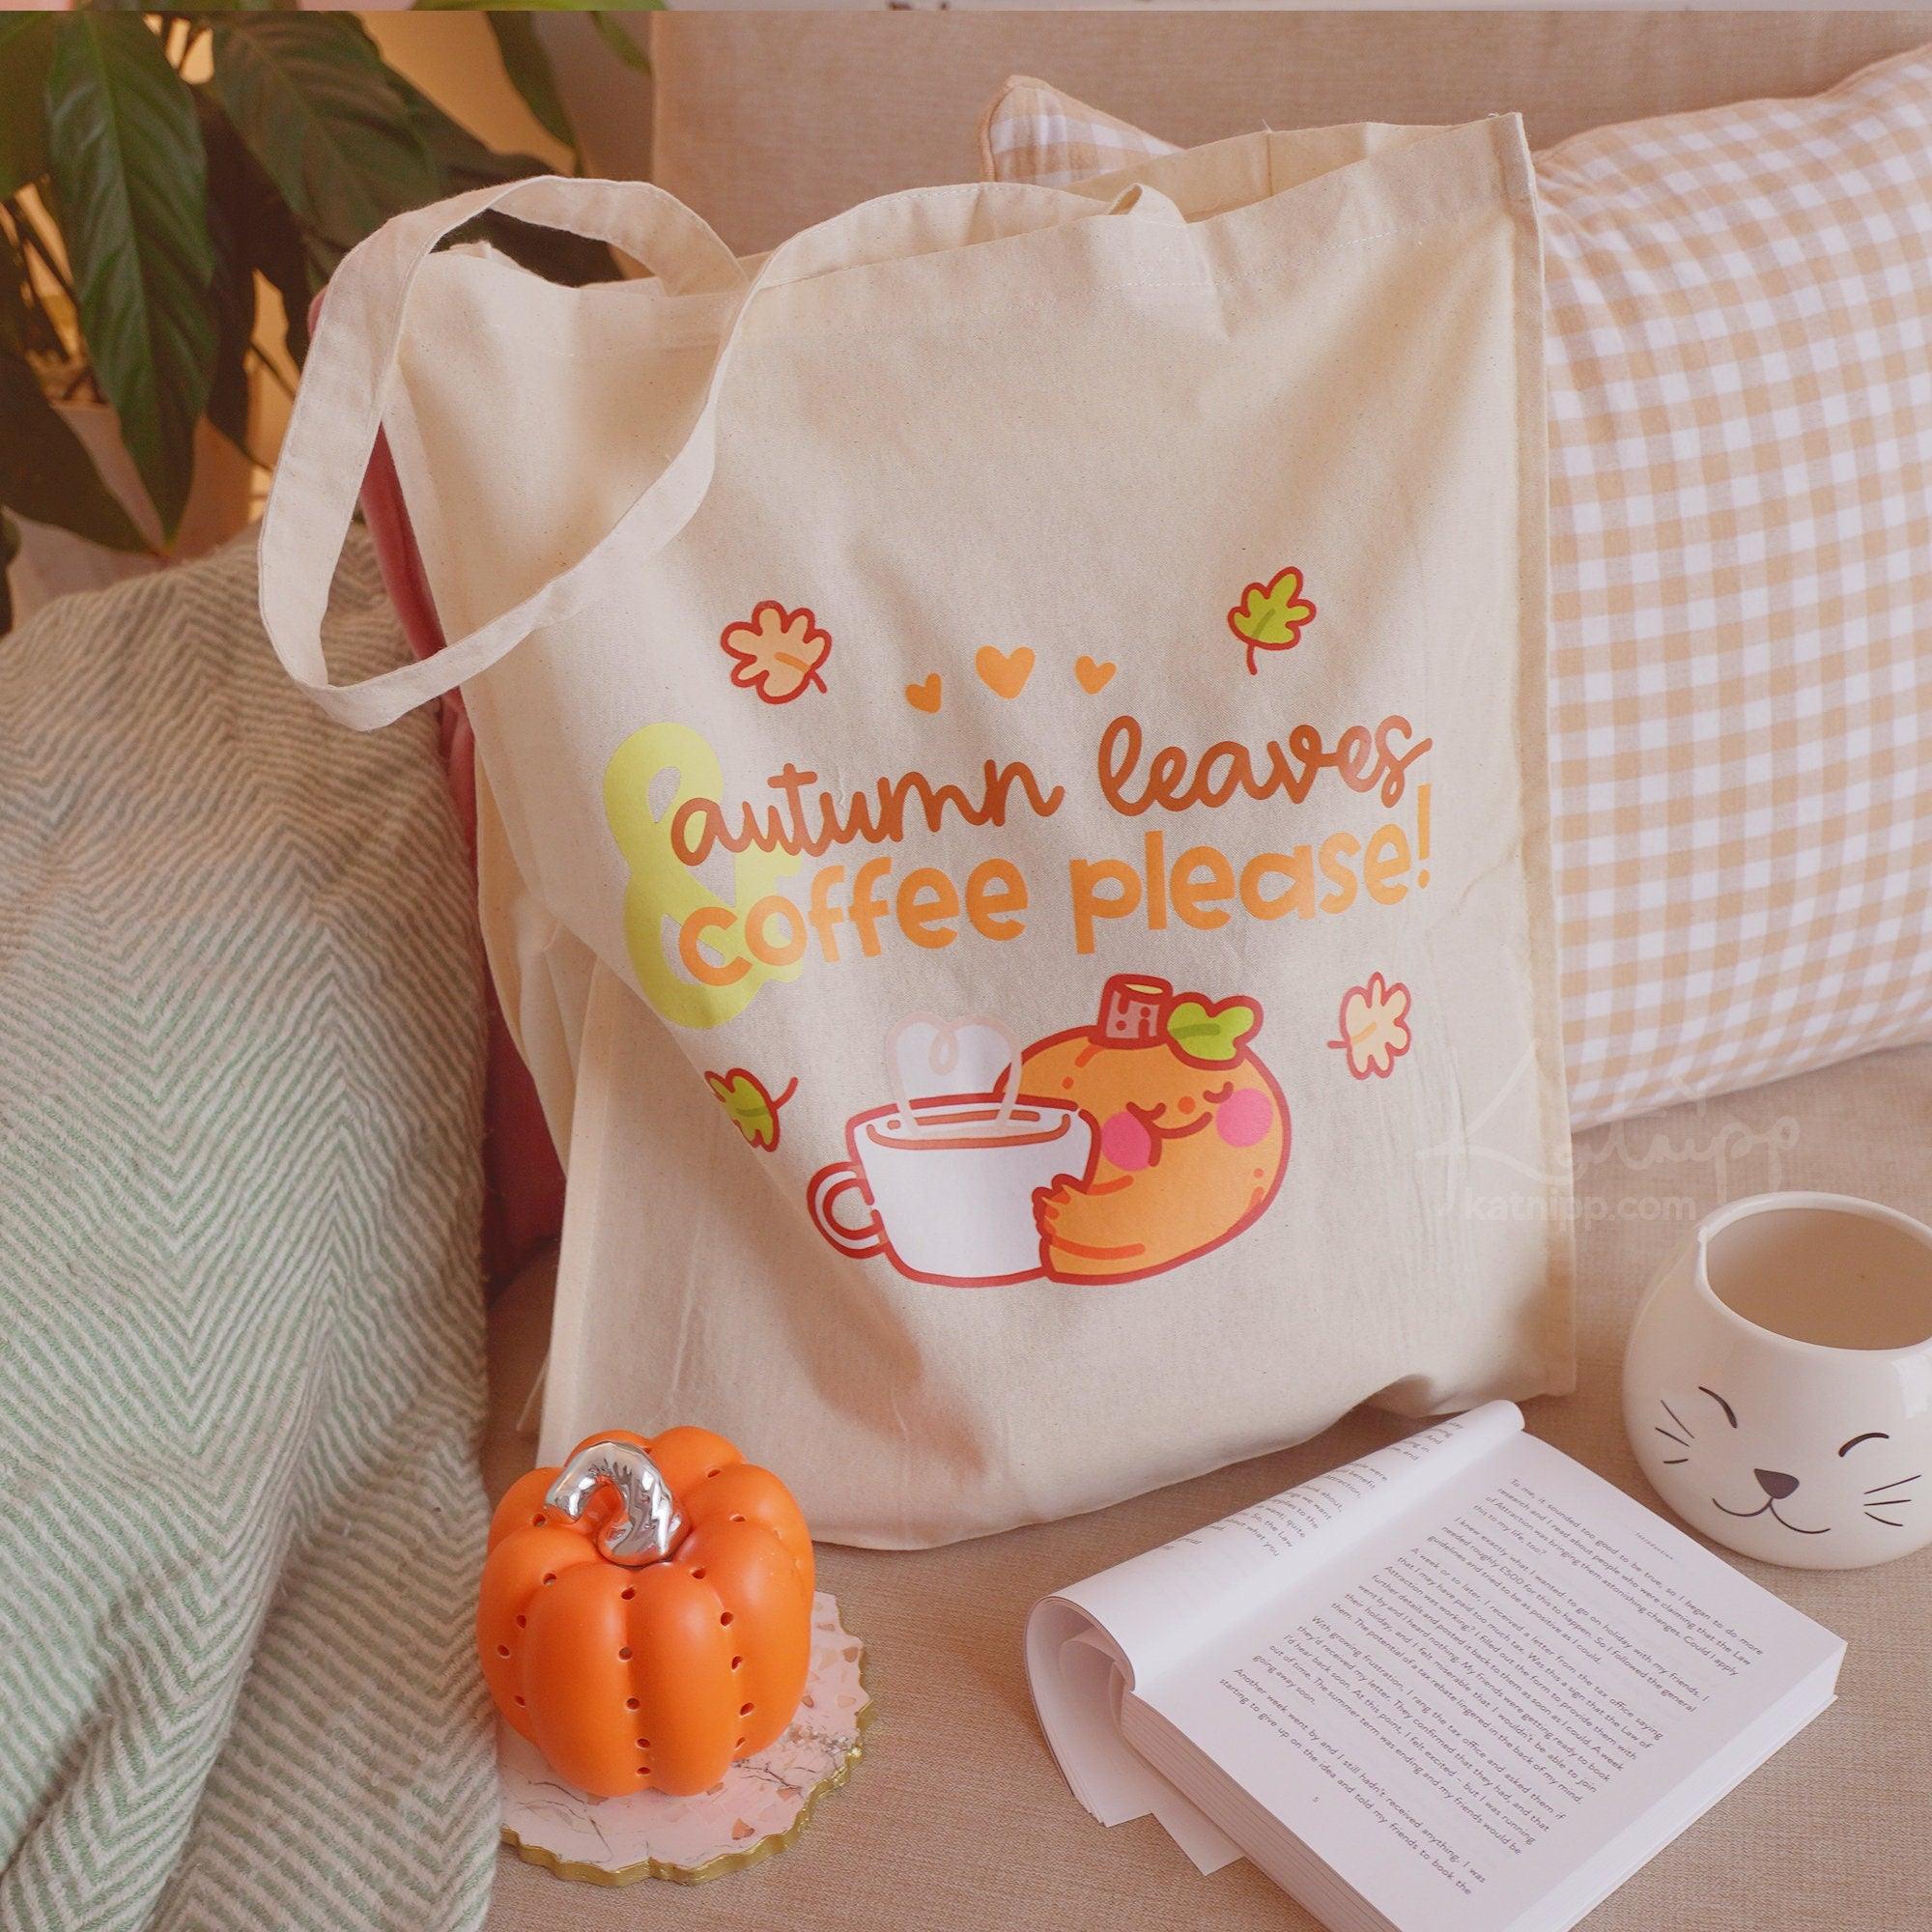 Autumn Leaves & Coffee Please! Eco-Friendly Tote Bag - Original Katnipp Design - Handprinted Cotton, main